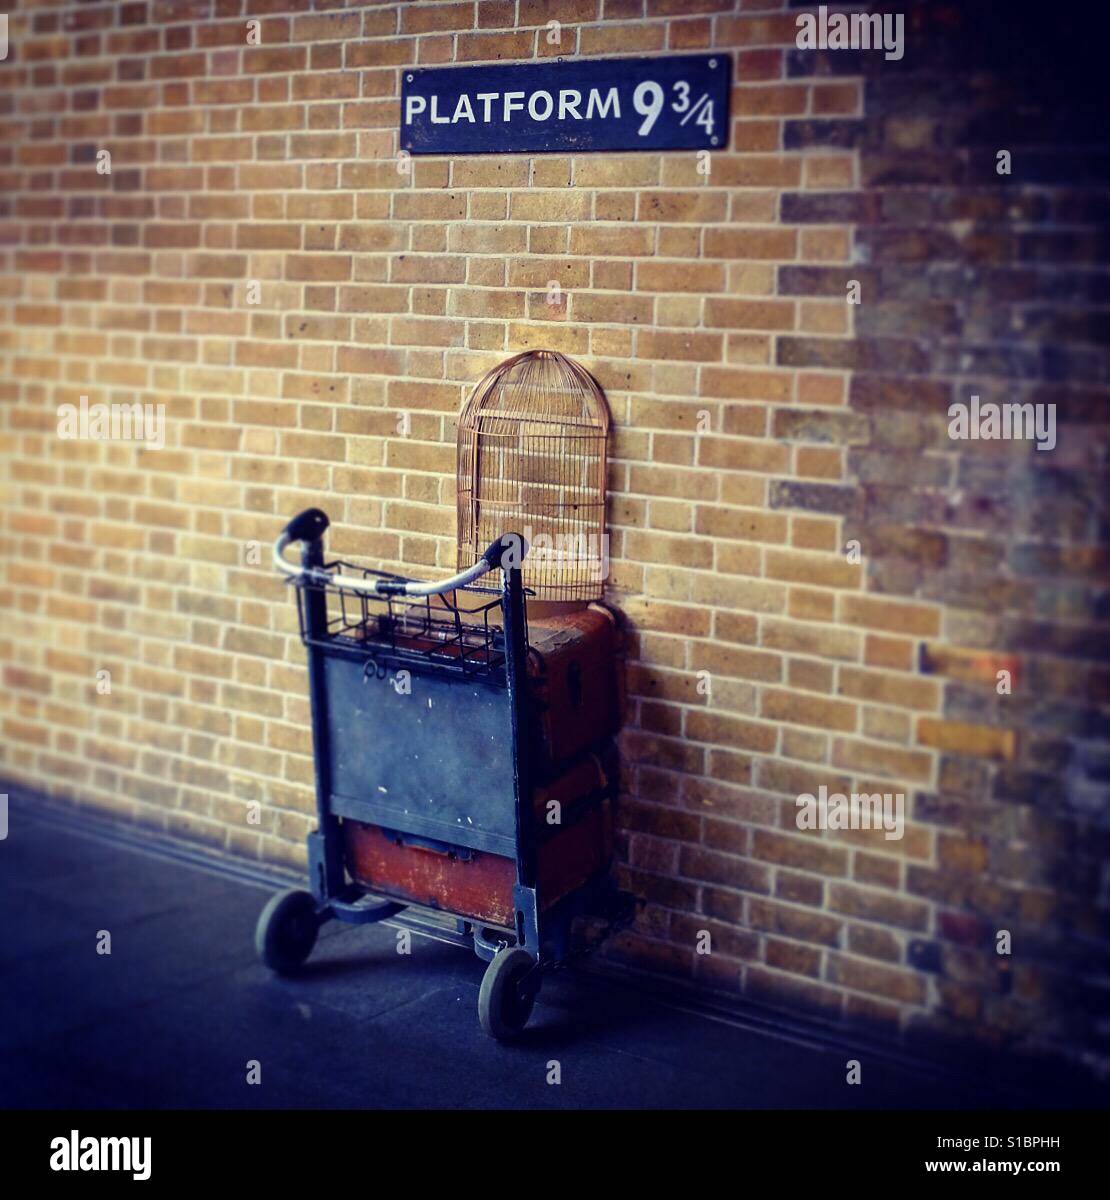 Harry Potter platform 9 & 3/4 at London Kings Cross train station. Stock Photo